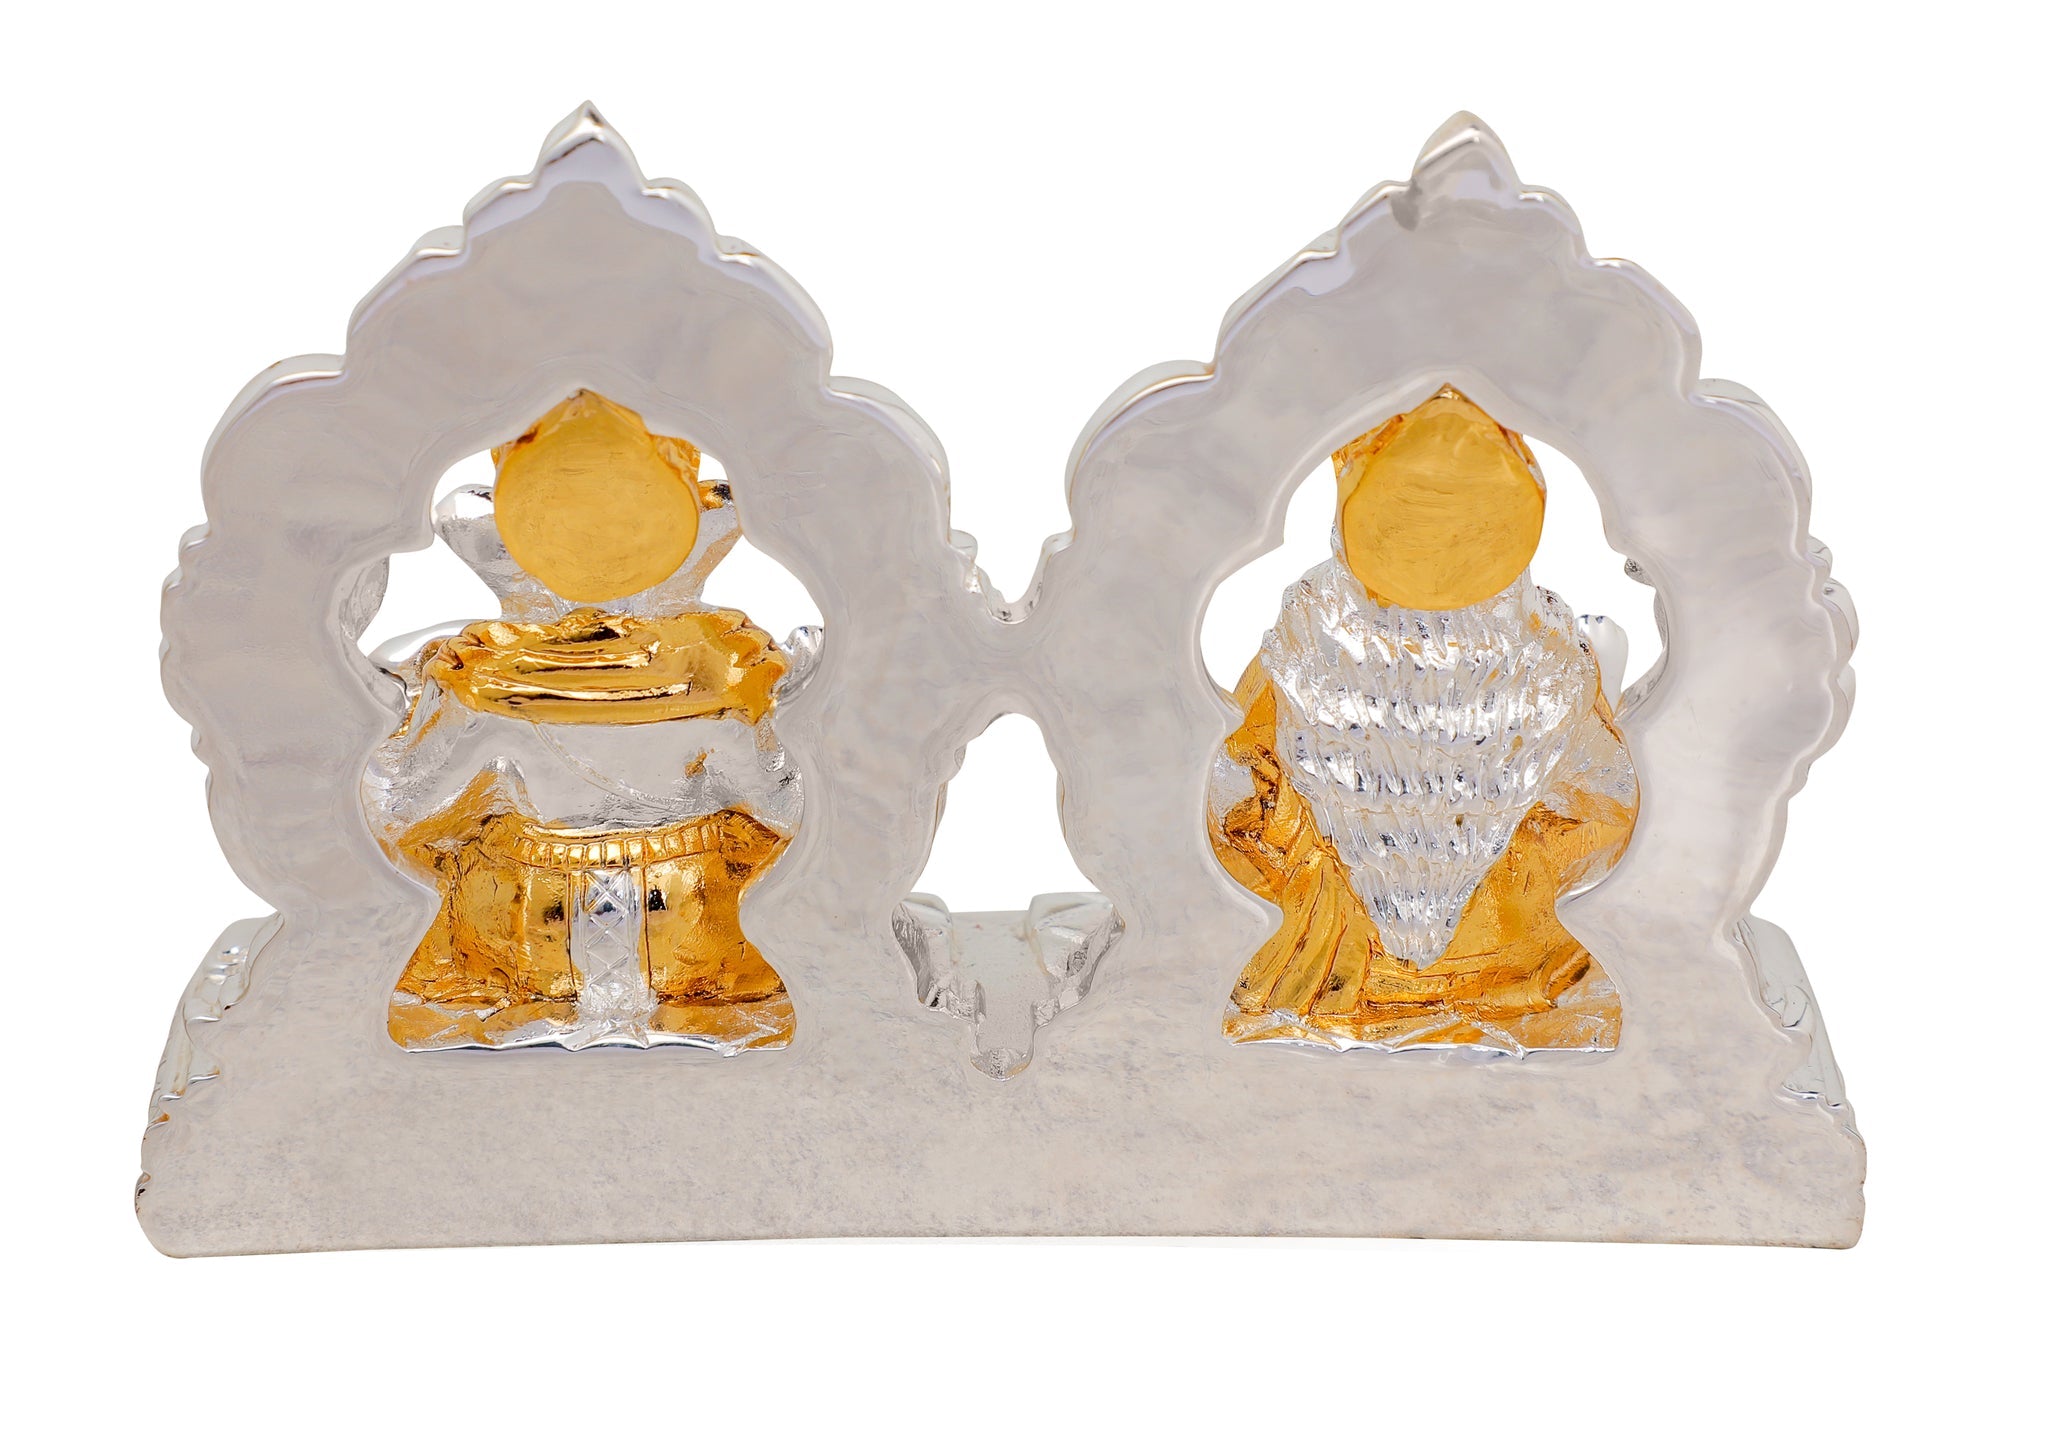 Lord Ganesh & Laxmi 999 Gold & Silver Plated Murti